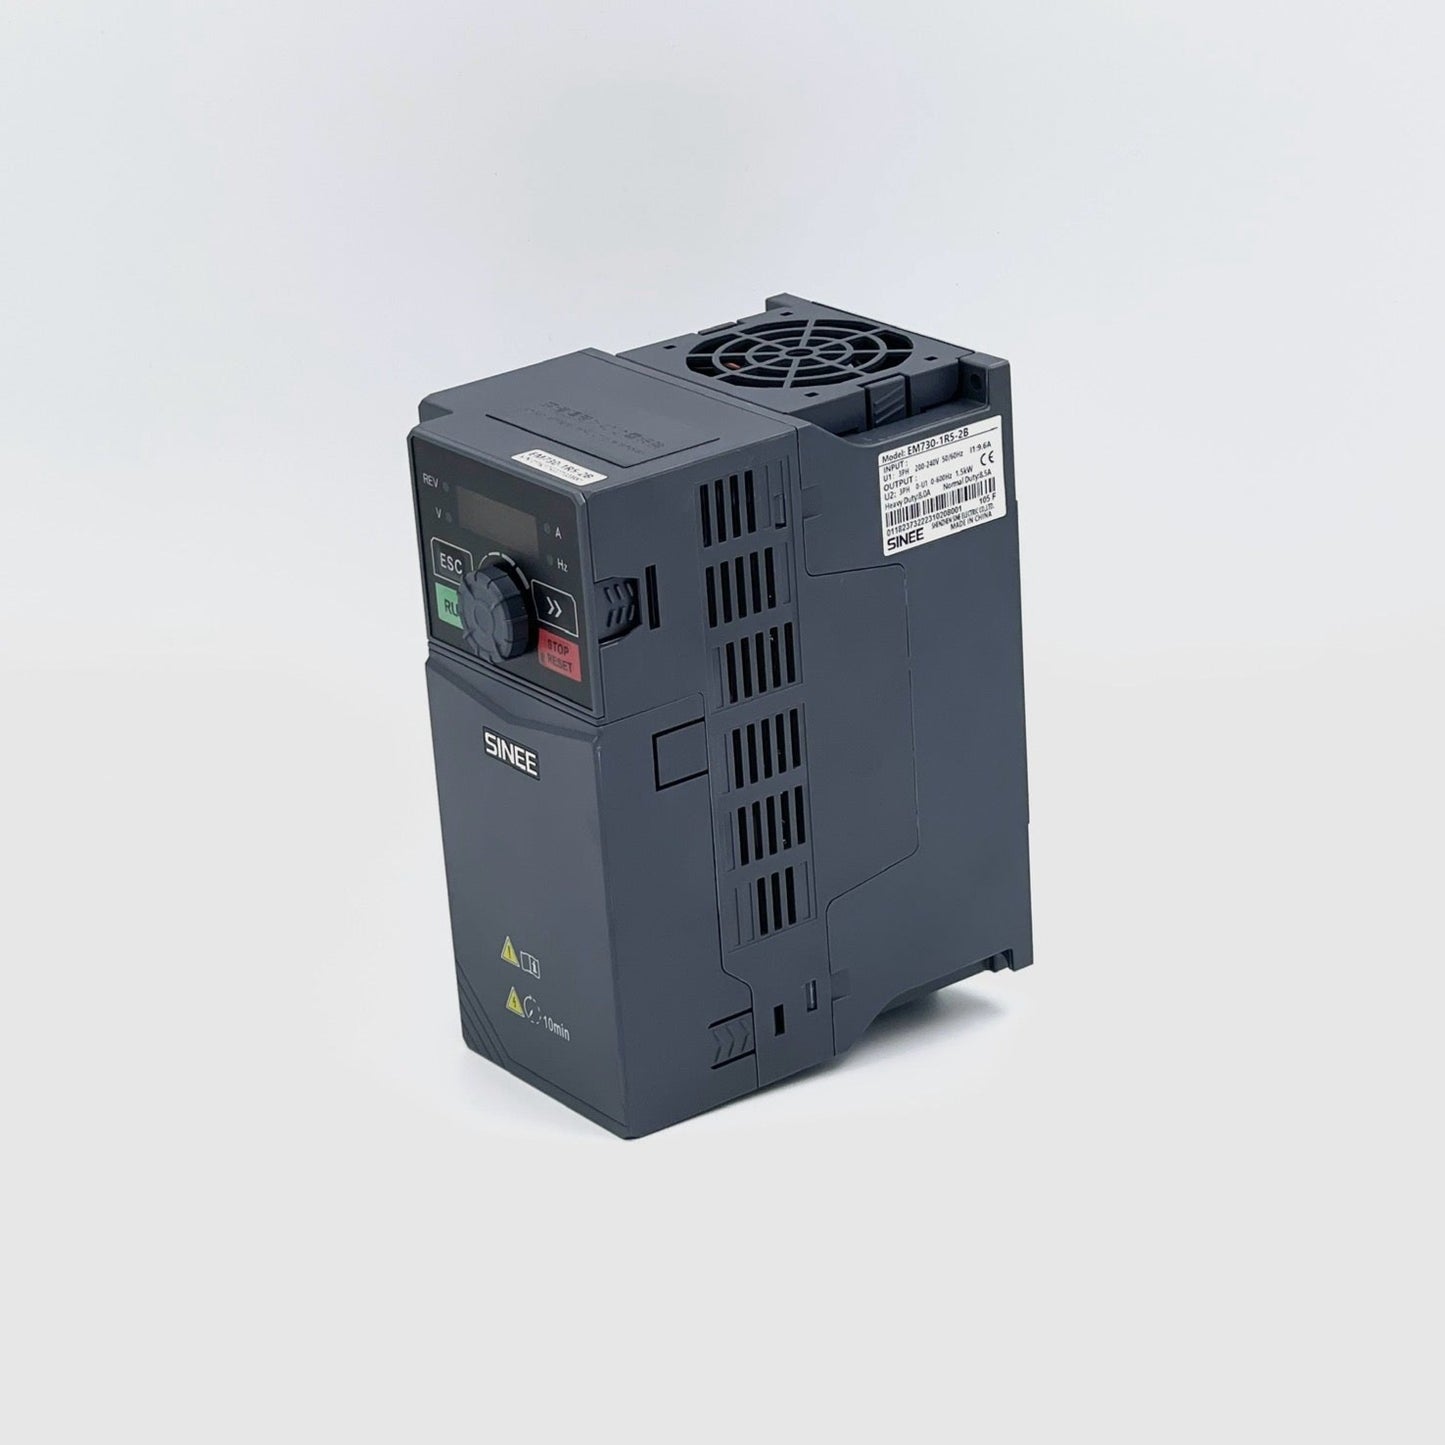 EM730-1R5-2B - Frequency Drive 1.5 kW 240 Vac - SINEE